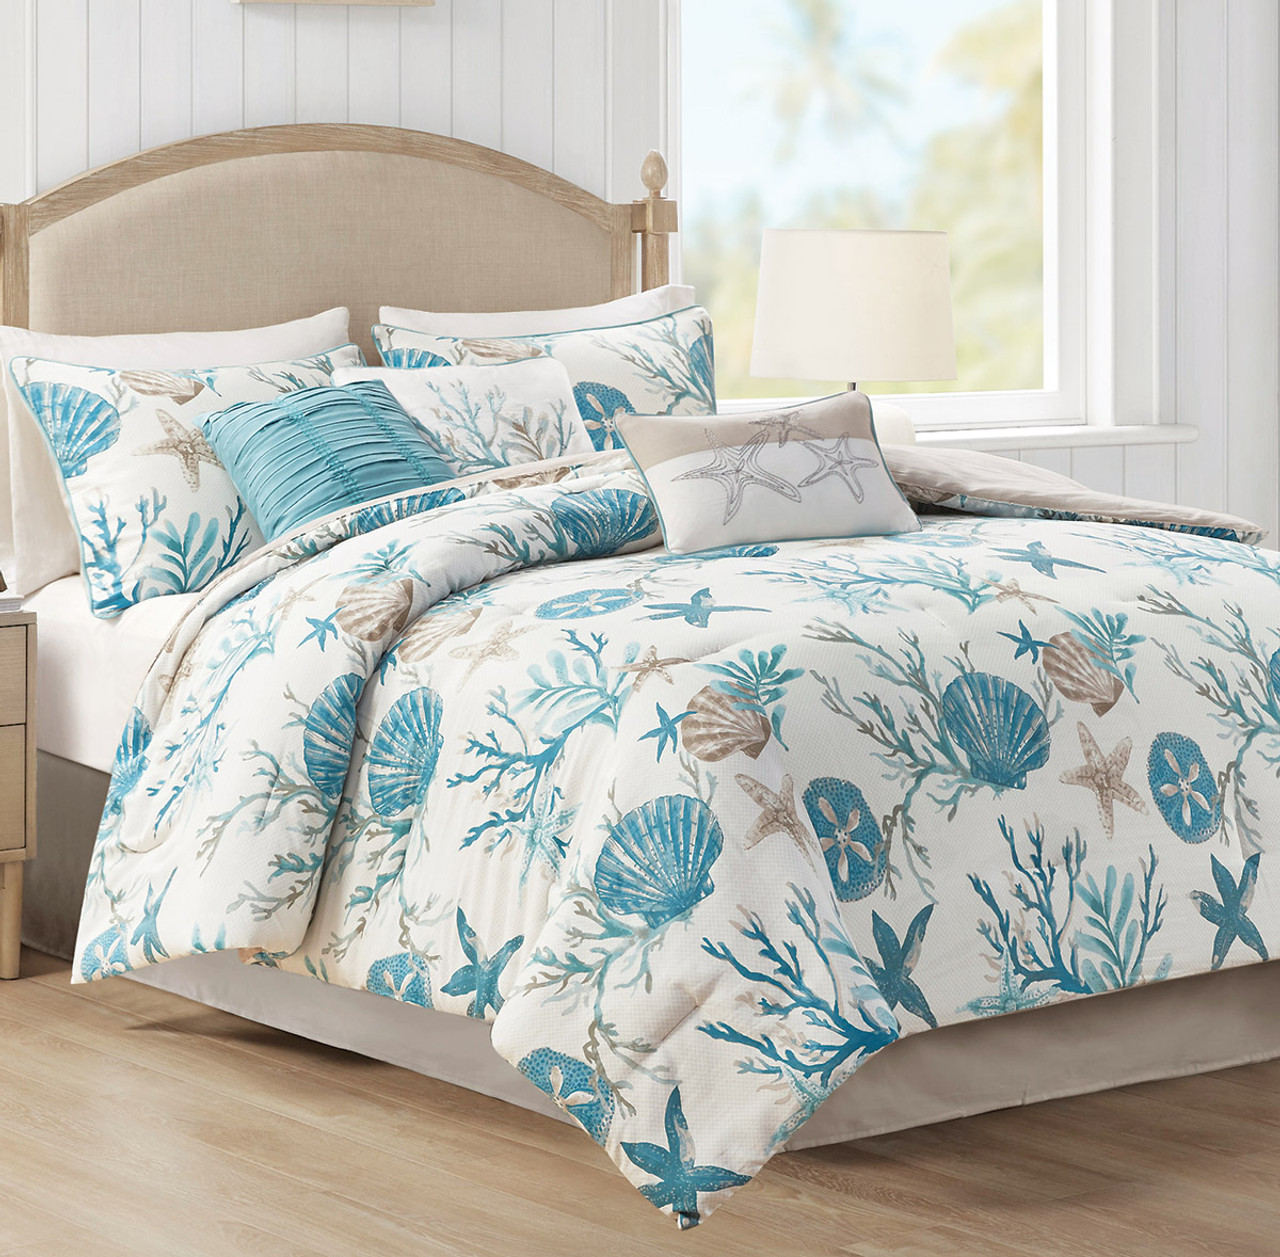 Beach Comforter Sets: King Size Coral & Aqua Reef Comforter Set | Bella ...